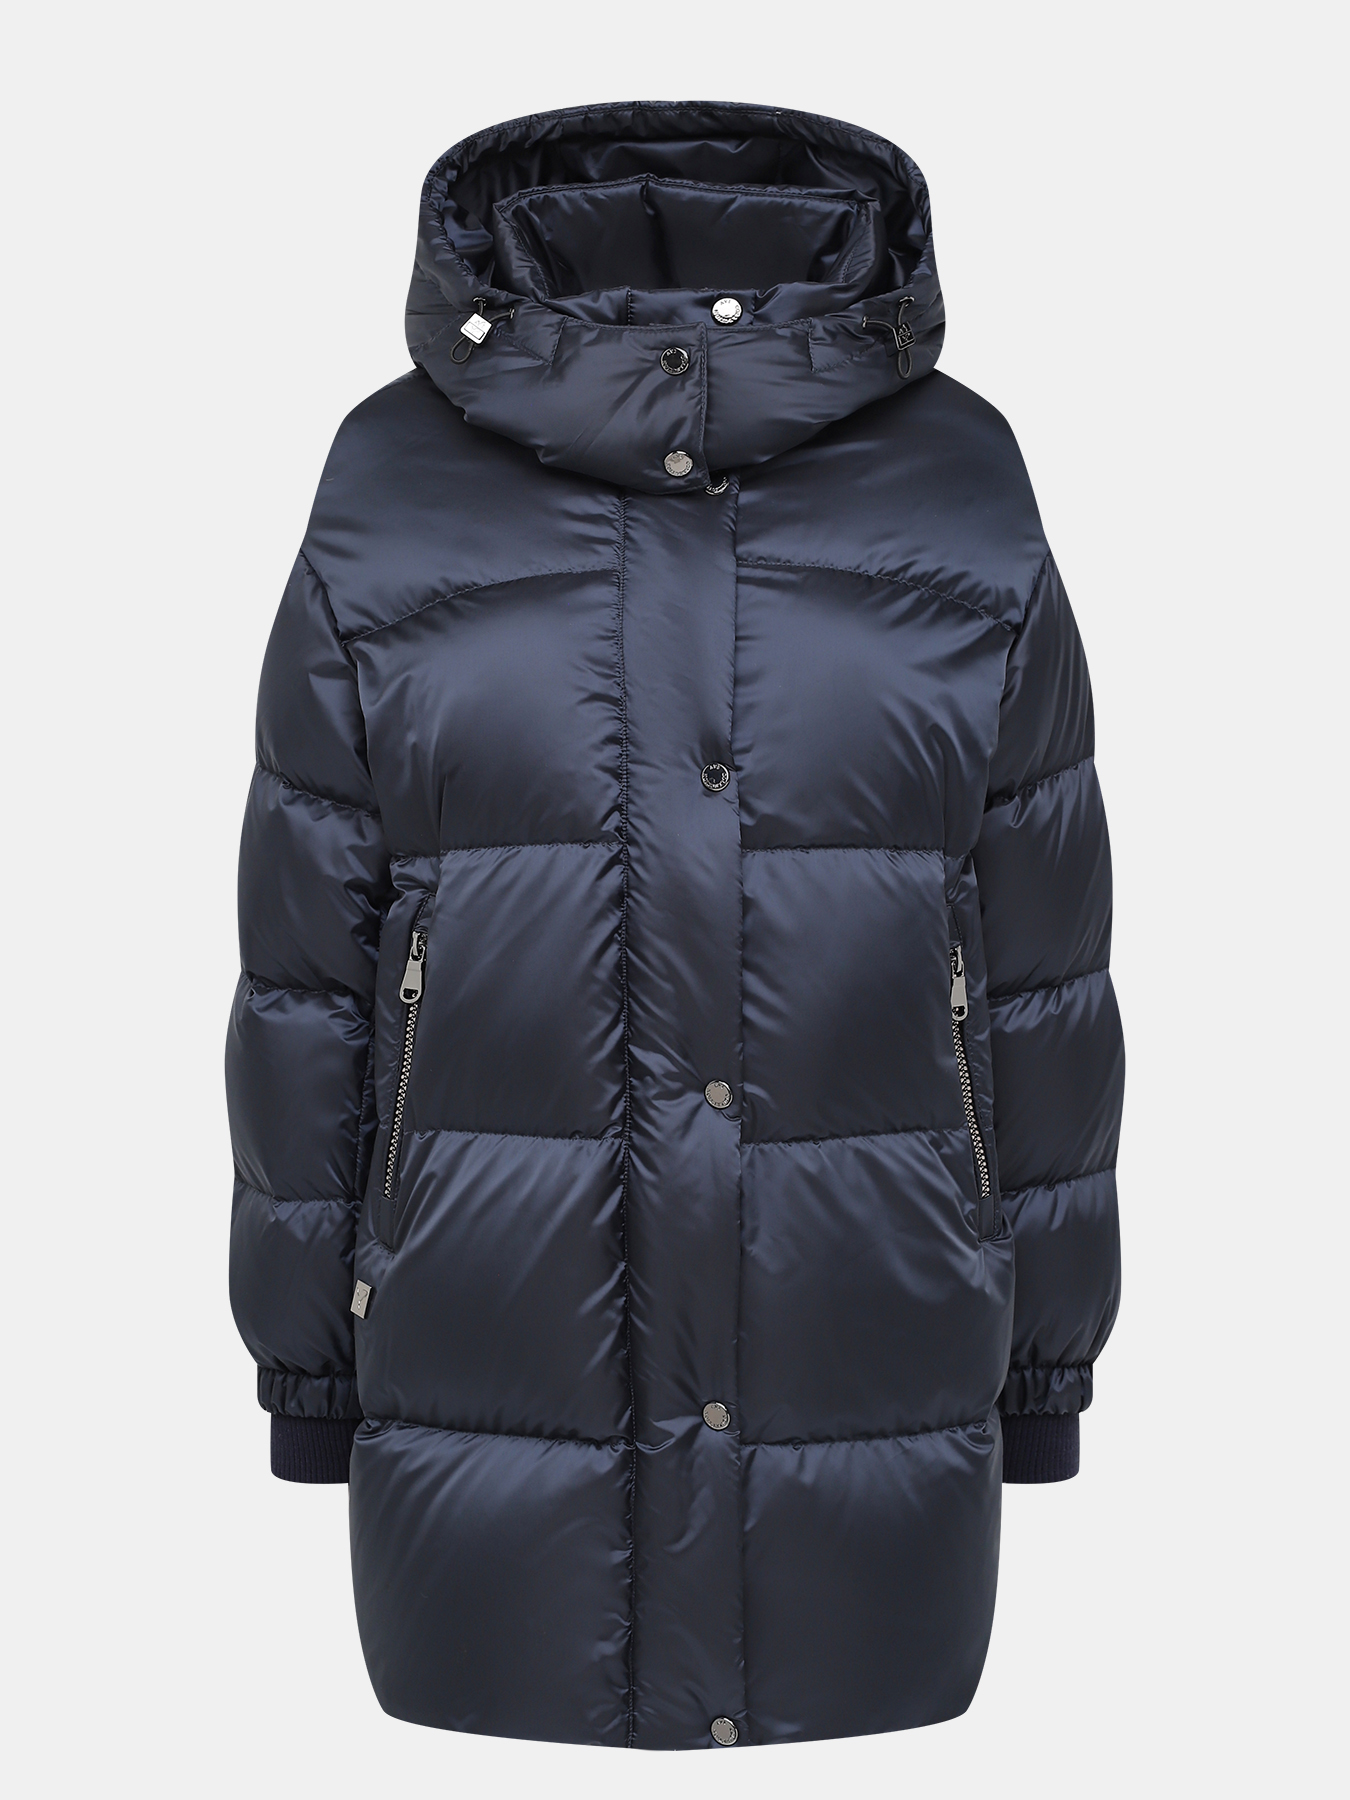 Пальто зимнее AVI 433512-018, цвет темно-синий, размер 36